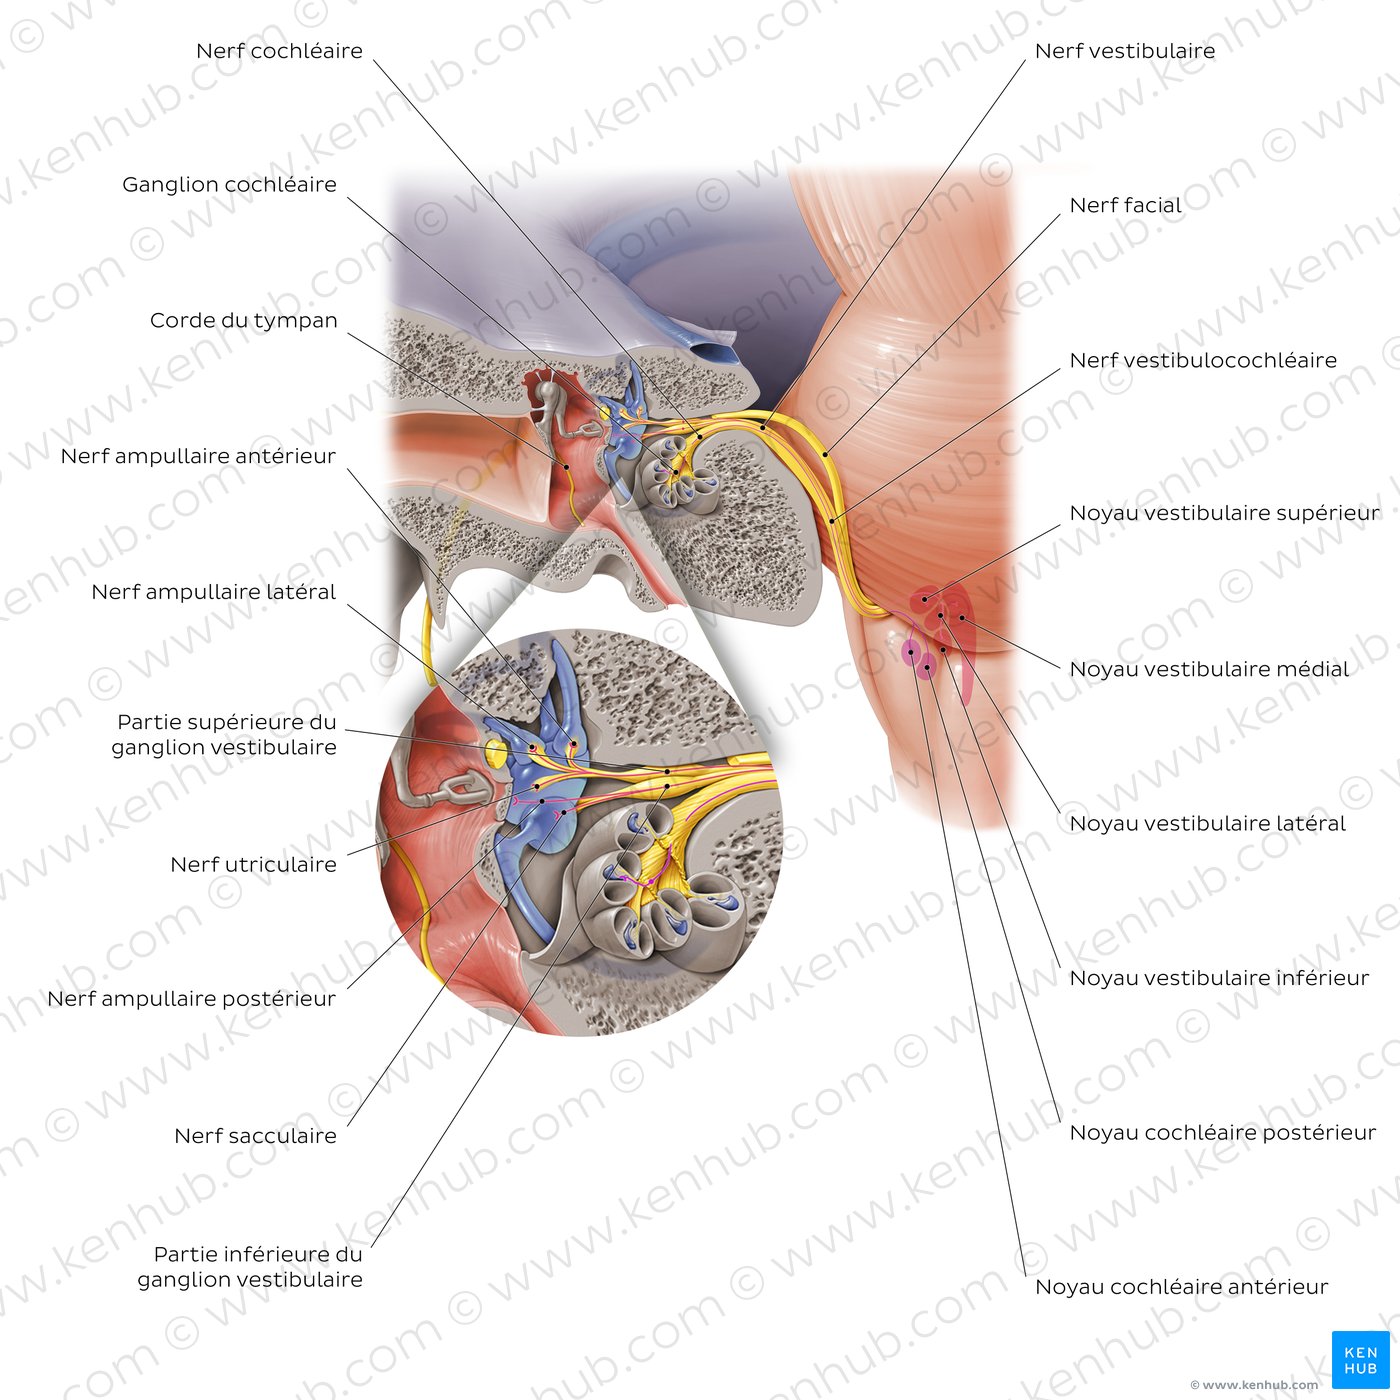 Trajet et rameaux du nerf vestibulocochléaire (schéma)